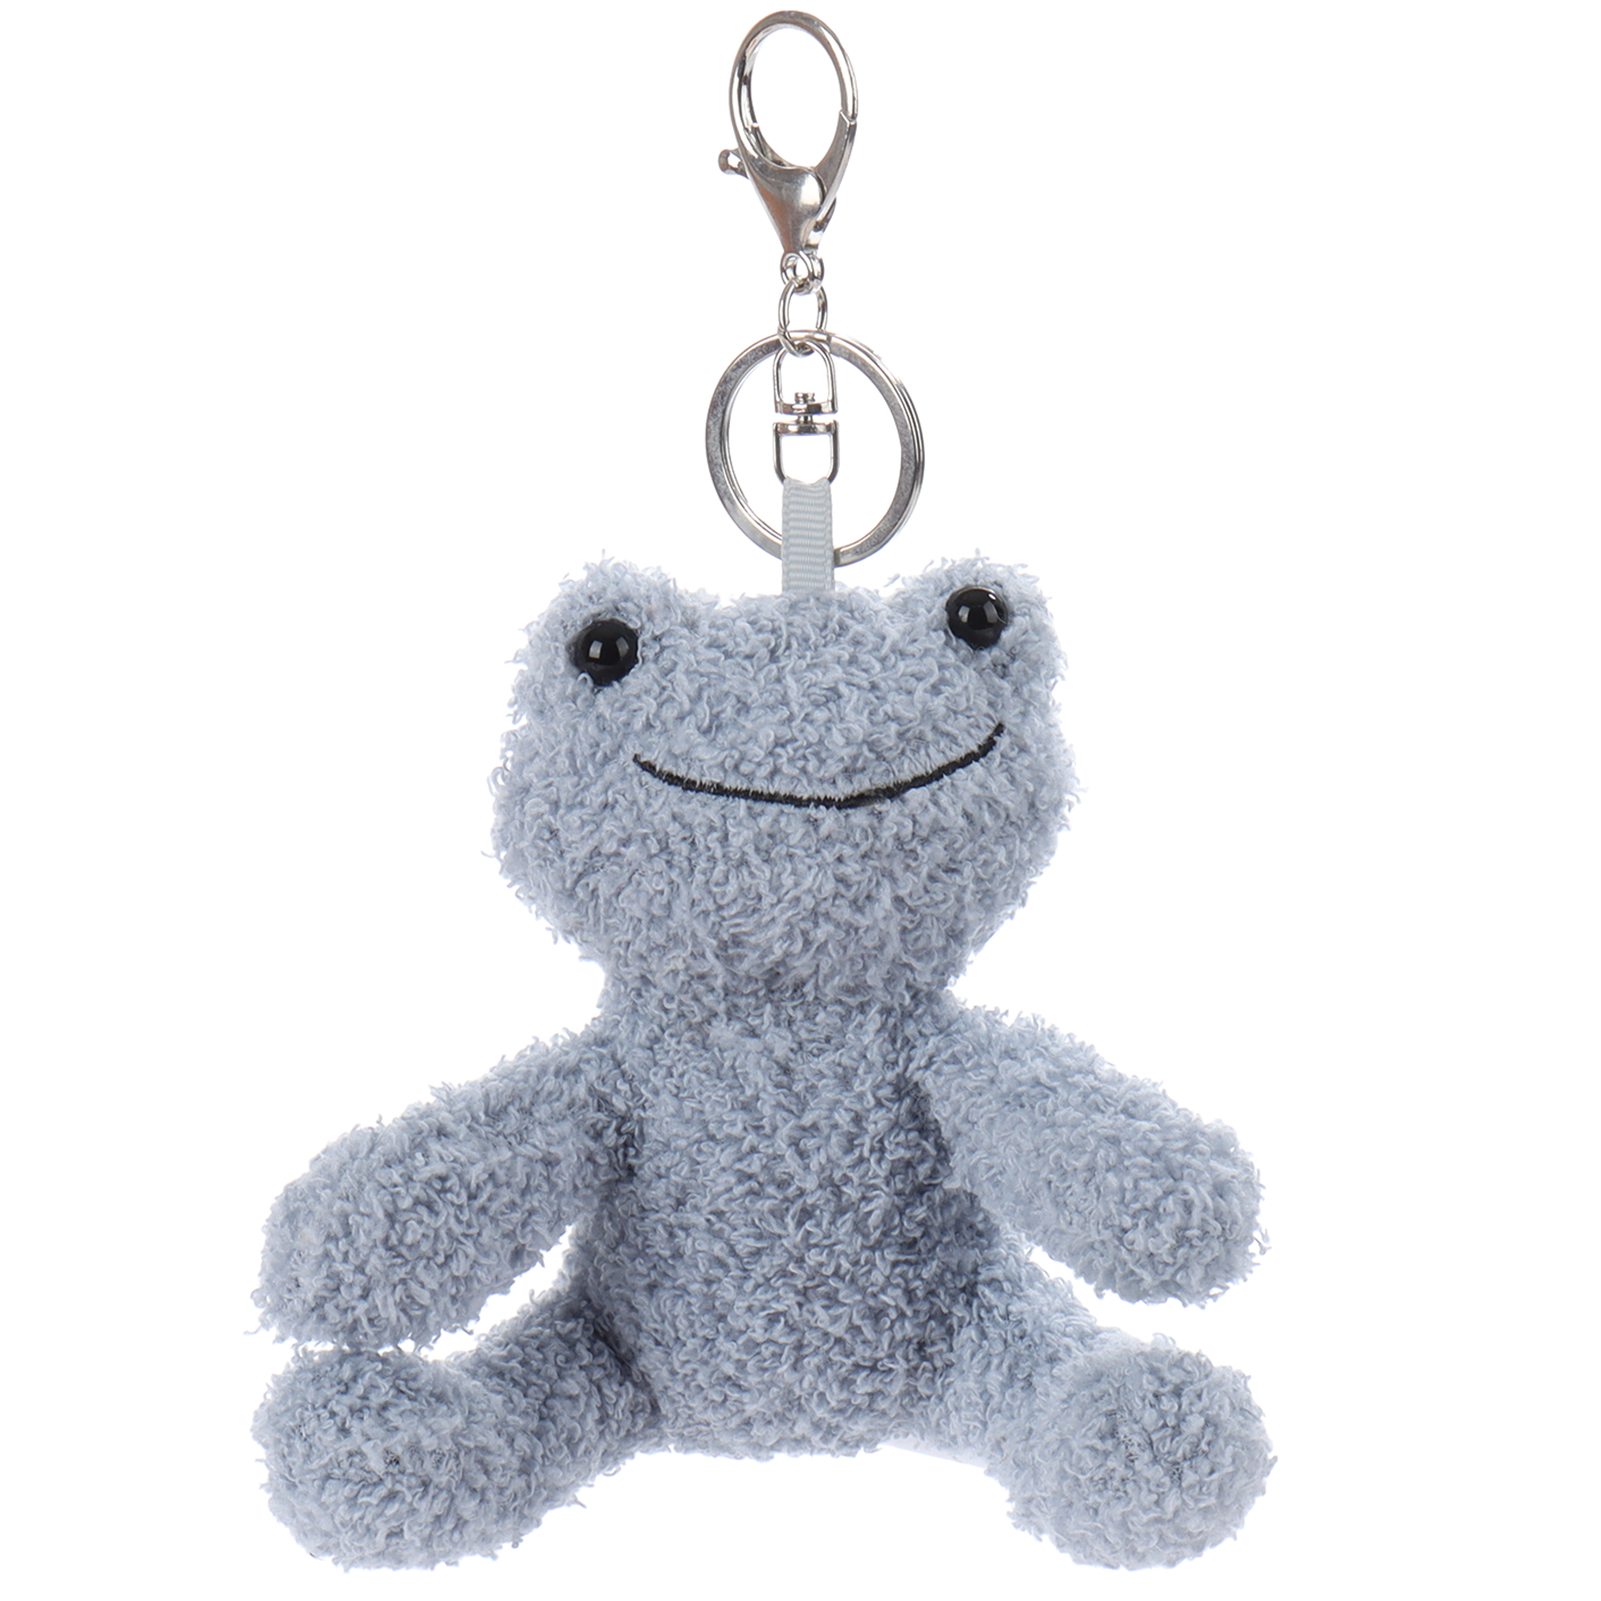 Imvana yeApricot yeVelvet Isele Keychain-Blue Stuffed Animal Soft Plush Keychain